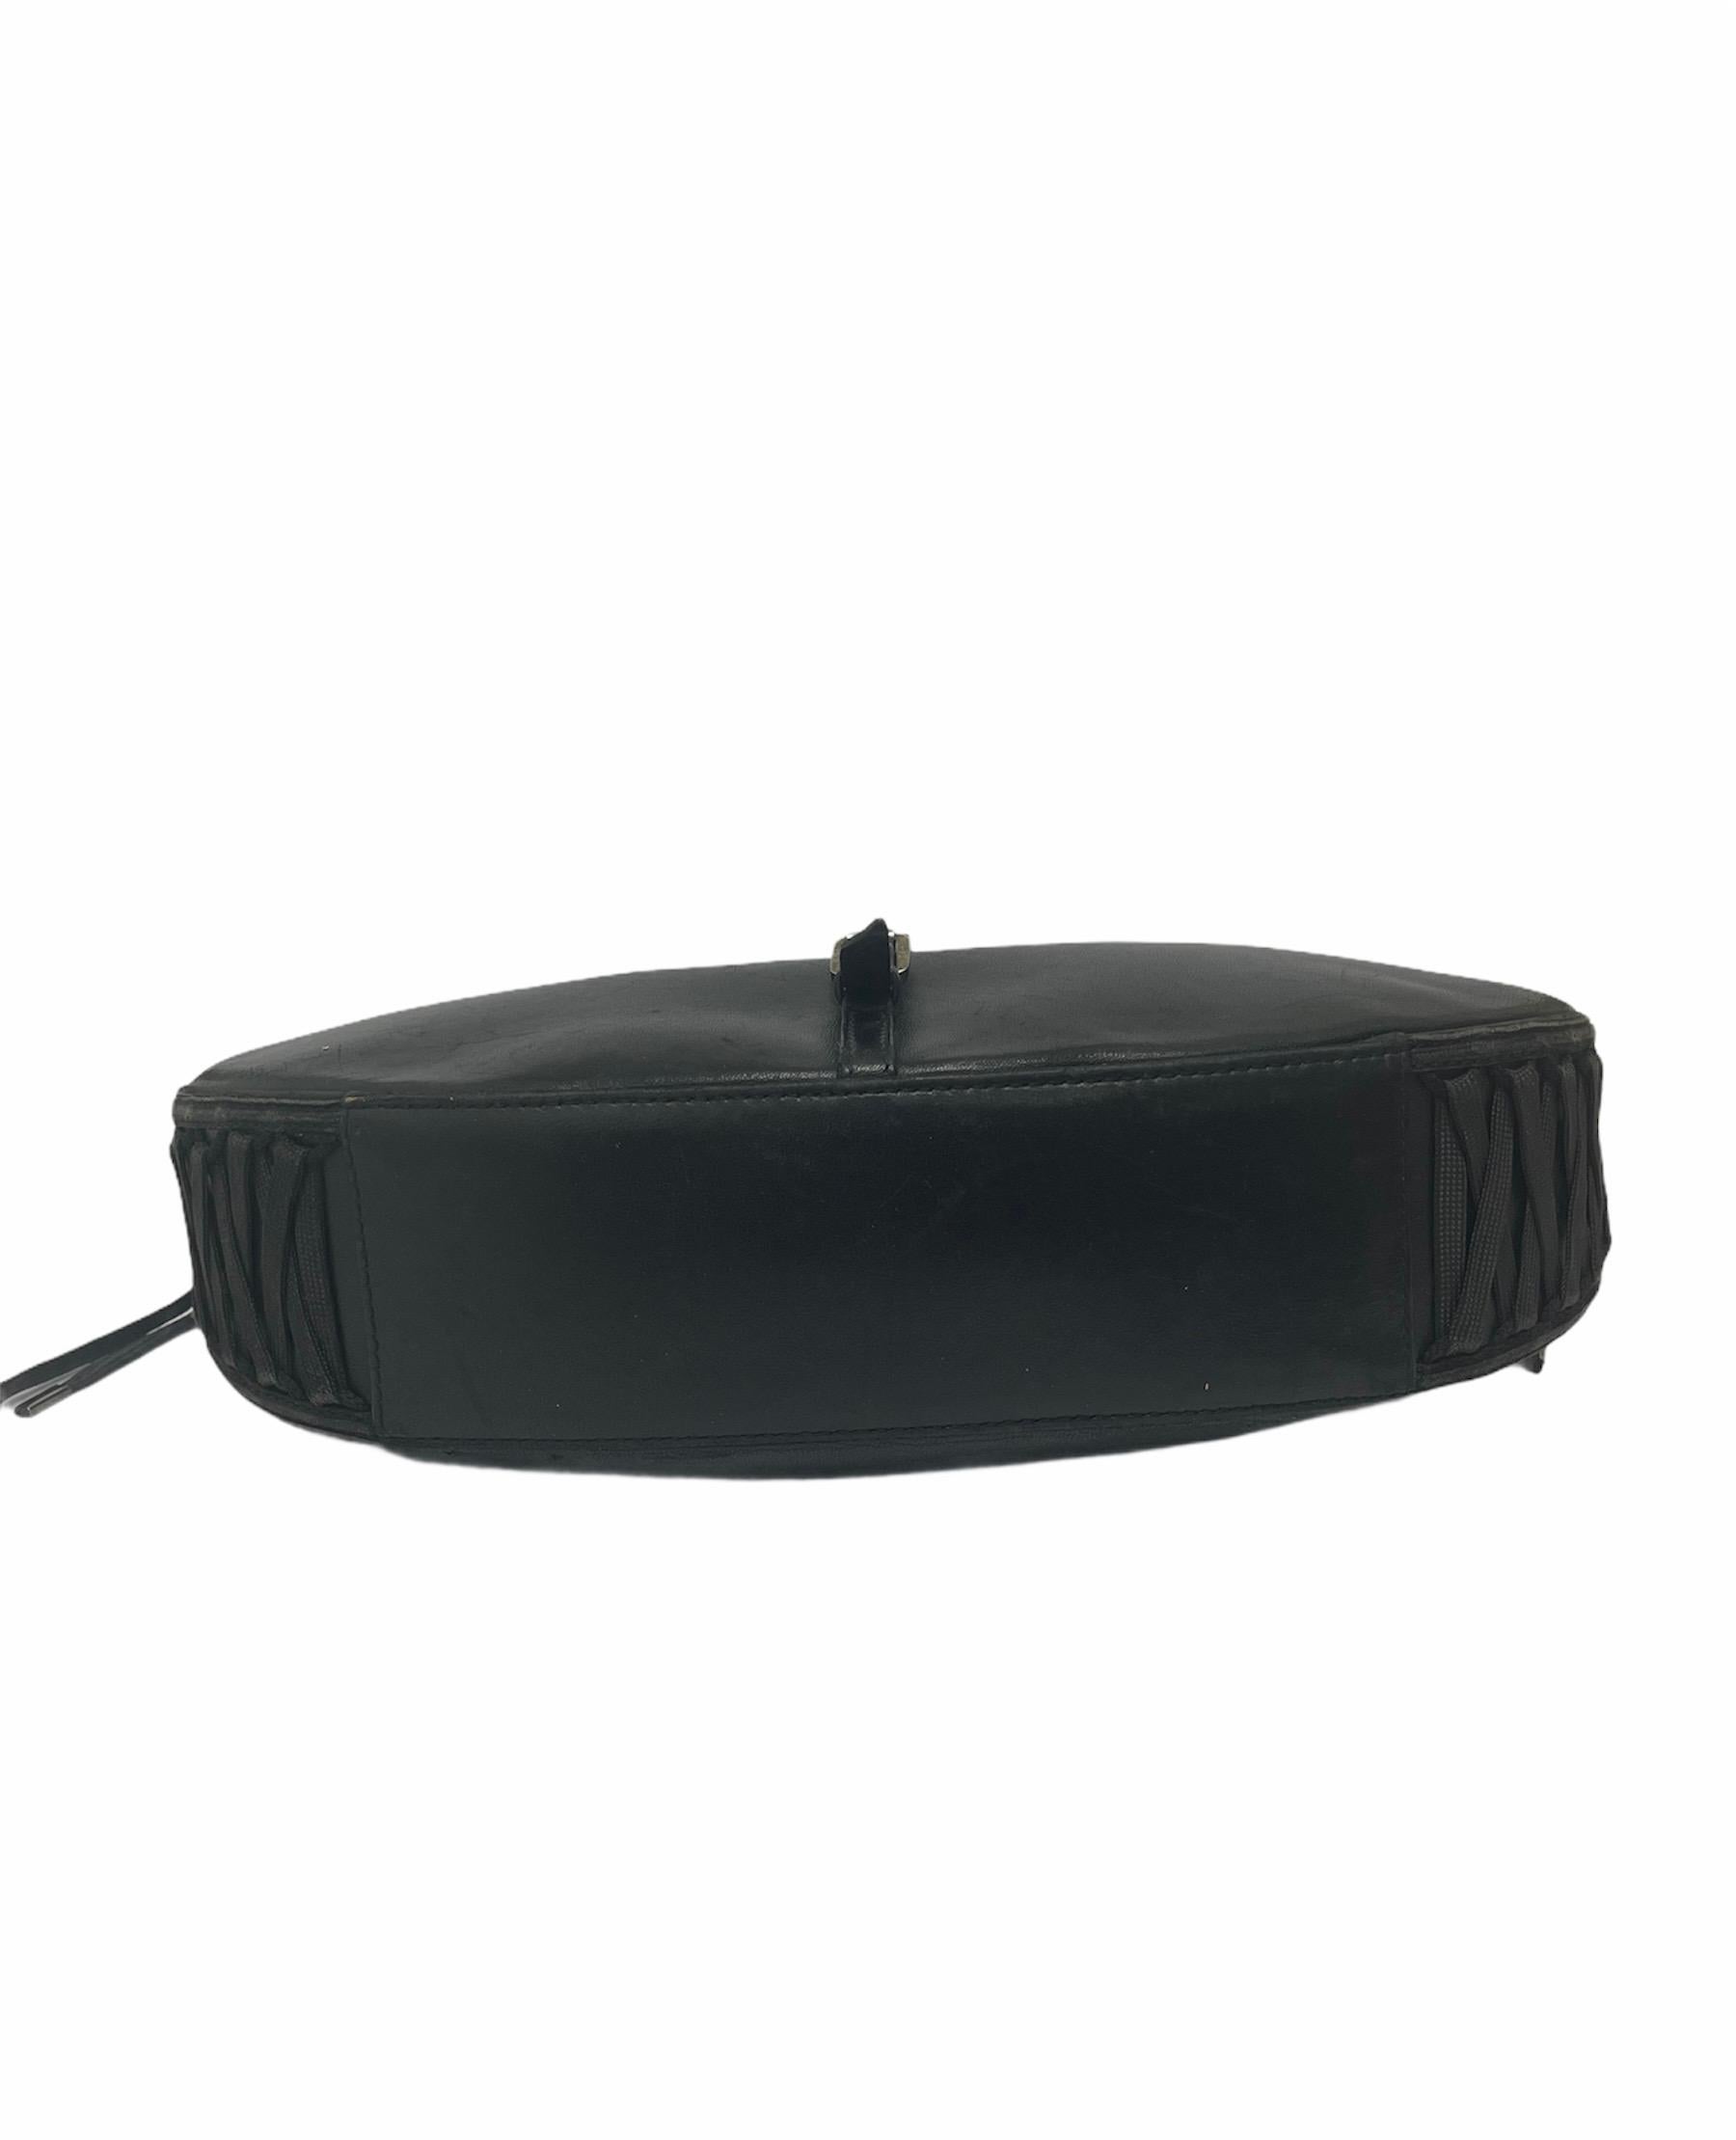 Dior Black Leather Corset Bag 1